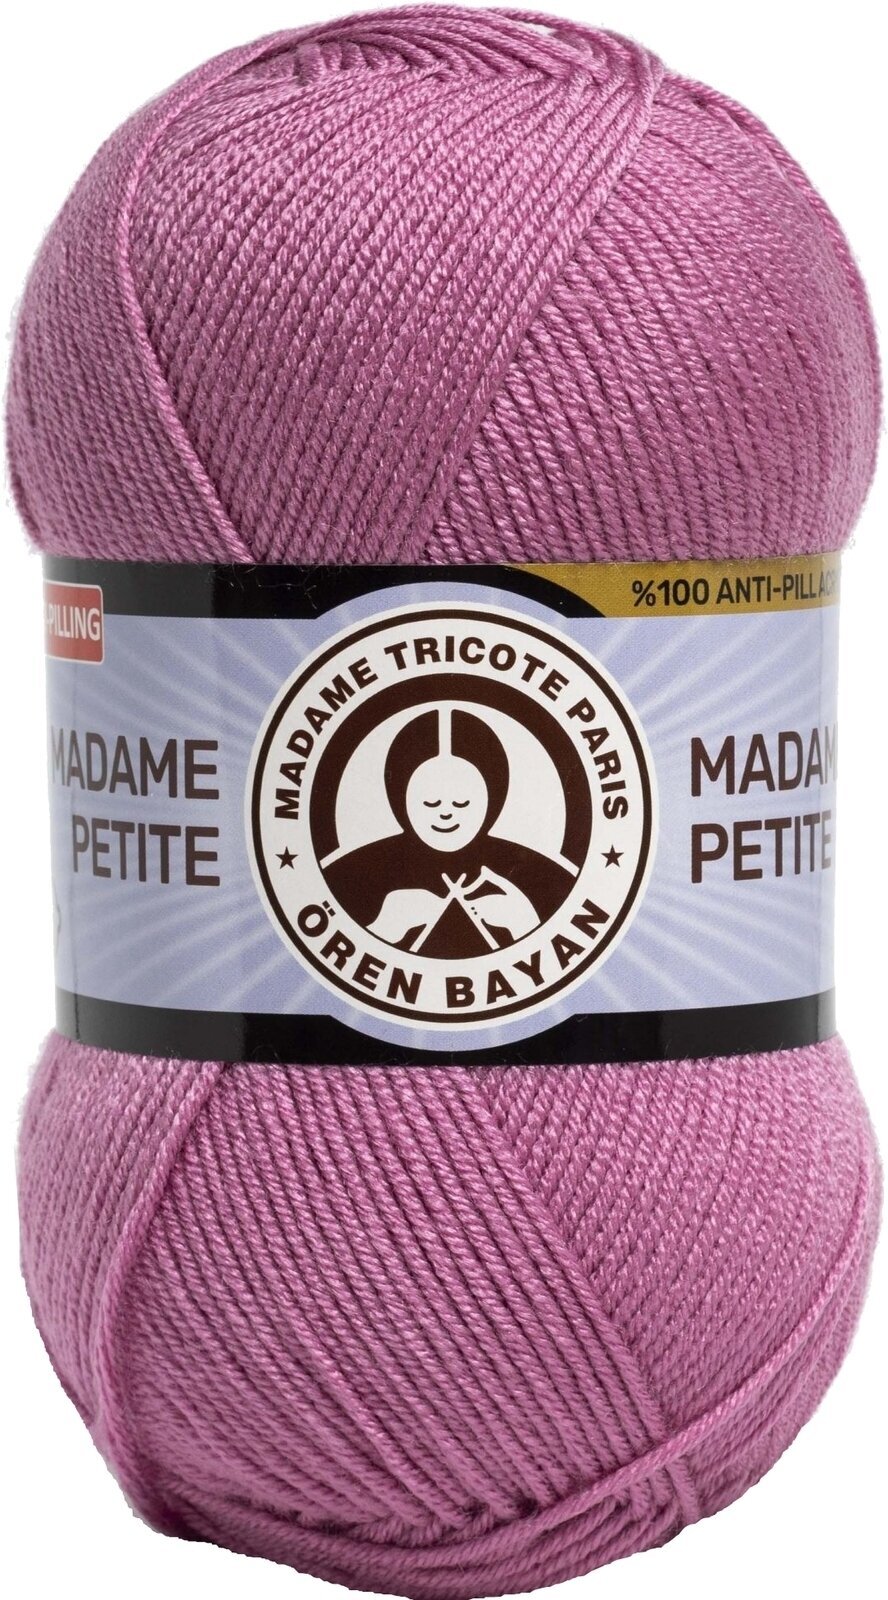 Neulelanka Madame Tricote Paris Madame Petite 3848 49 Neulelanka